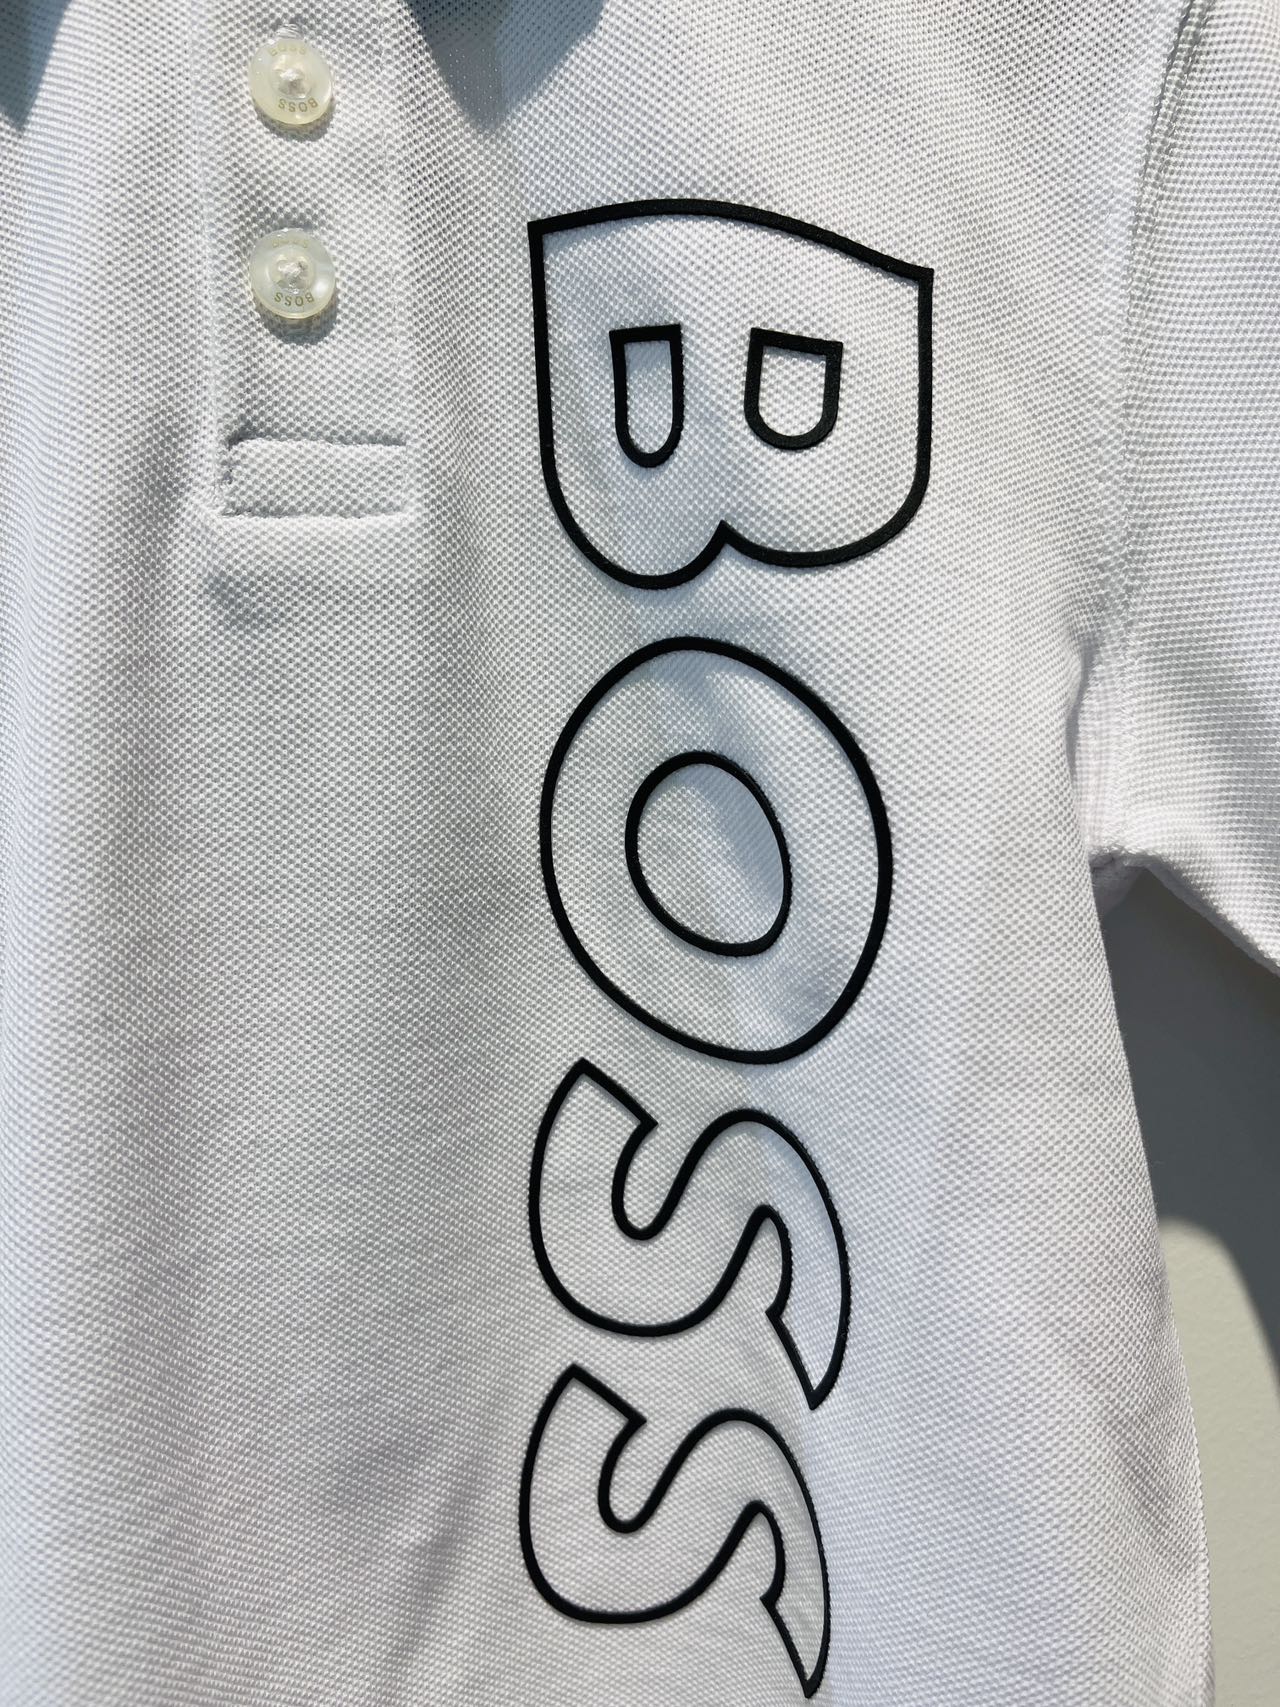 Boss Short Sleeve Polo White with Logo